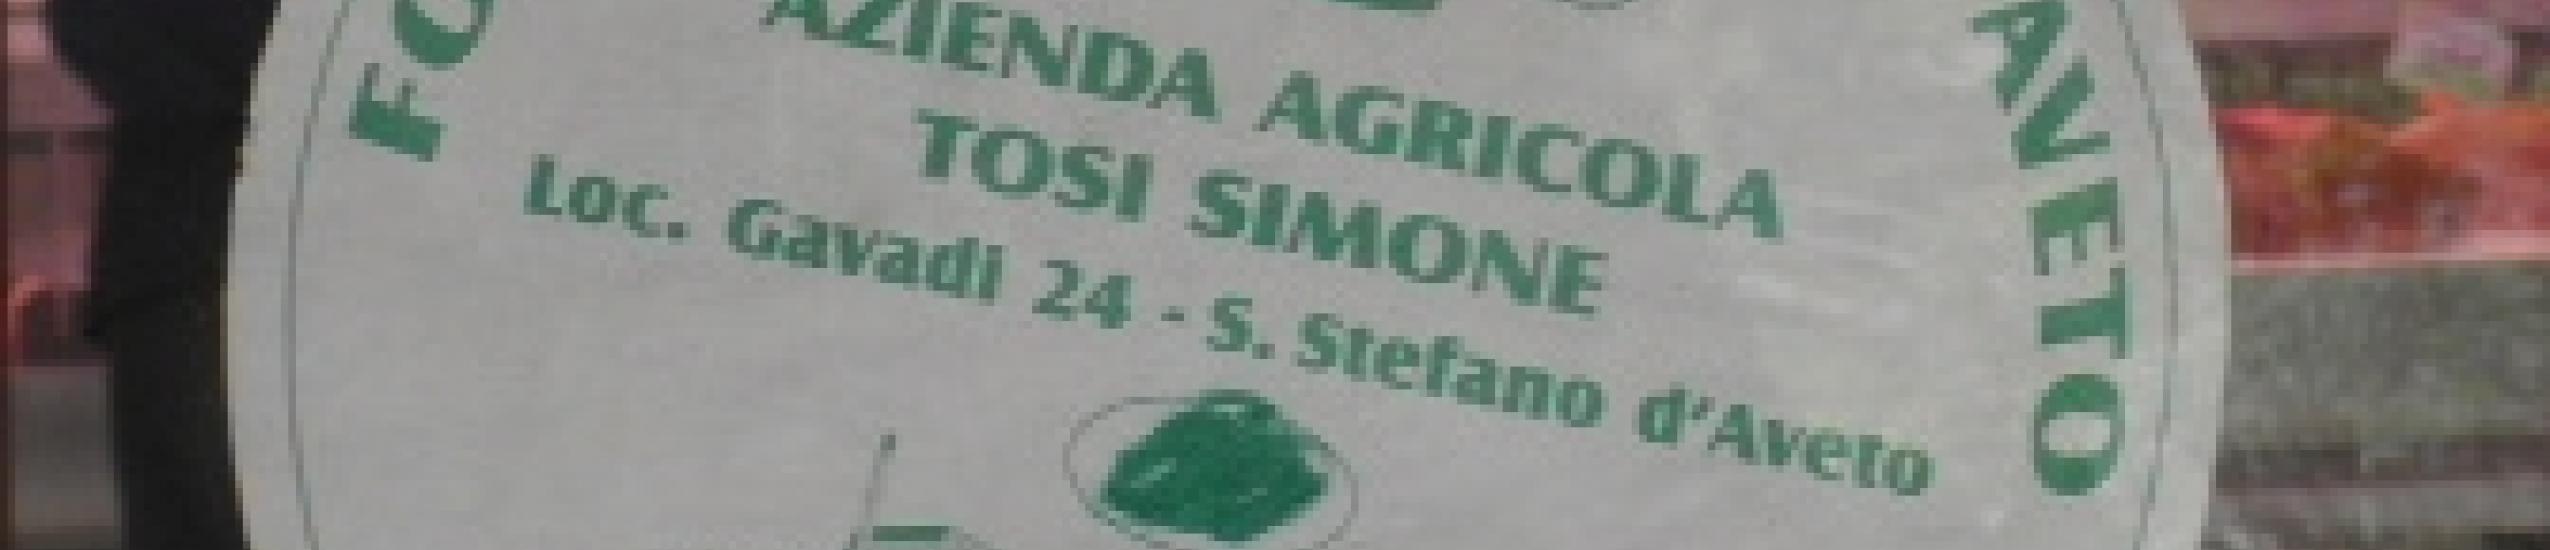 Logo azienda agricola tosi simone